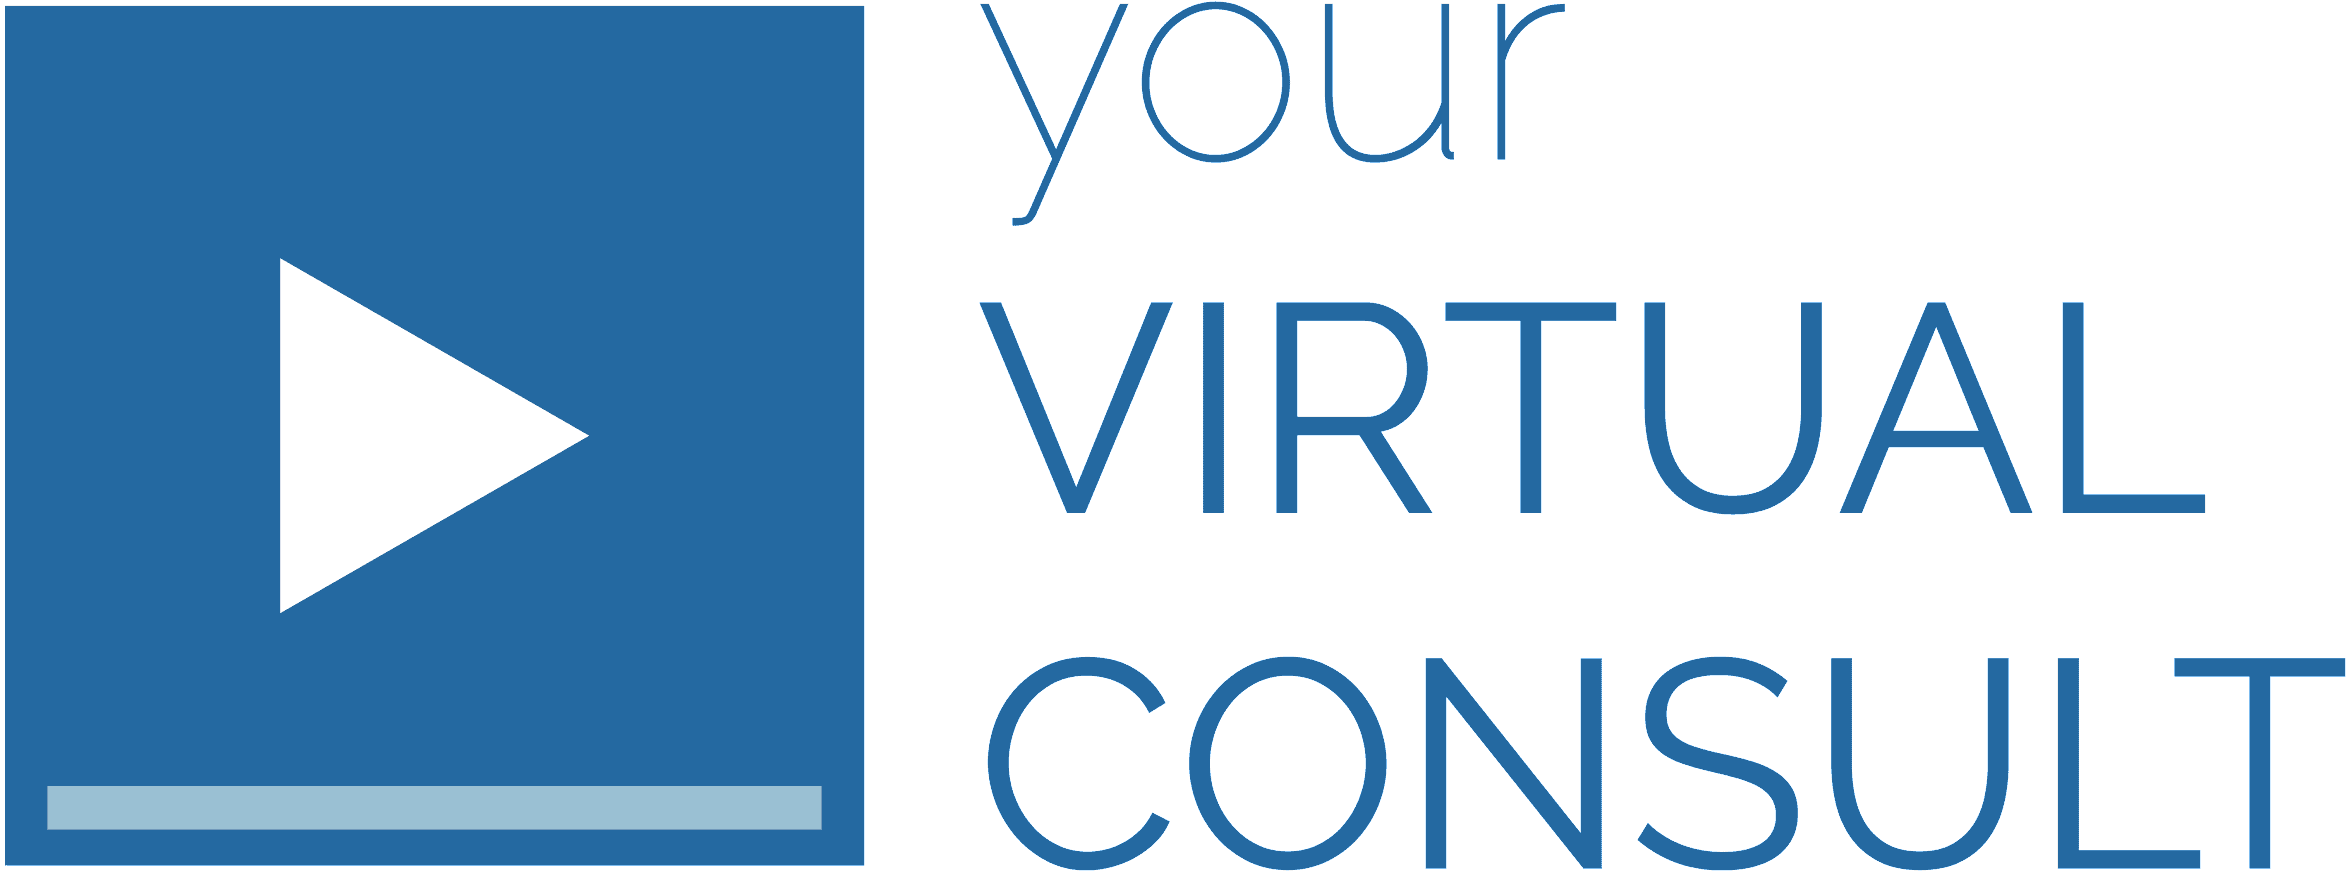 Your Virtual Consult Logo